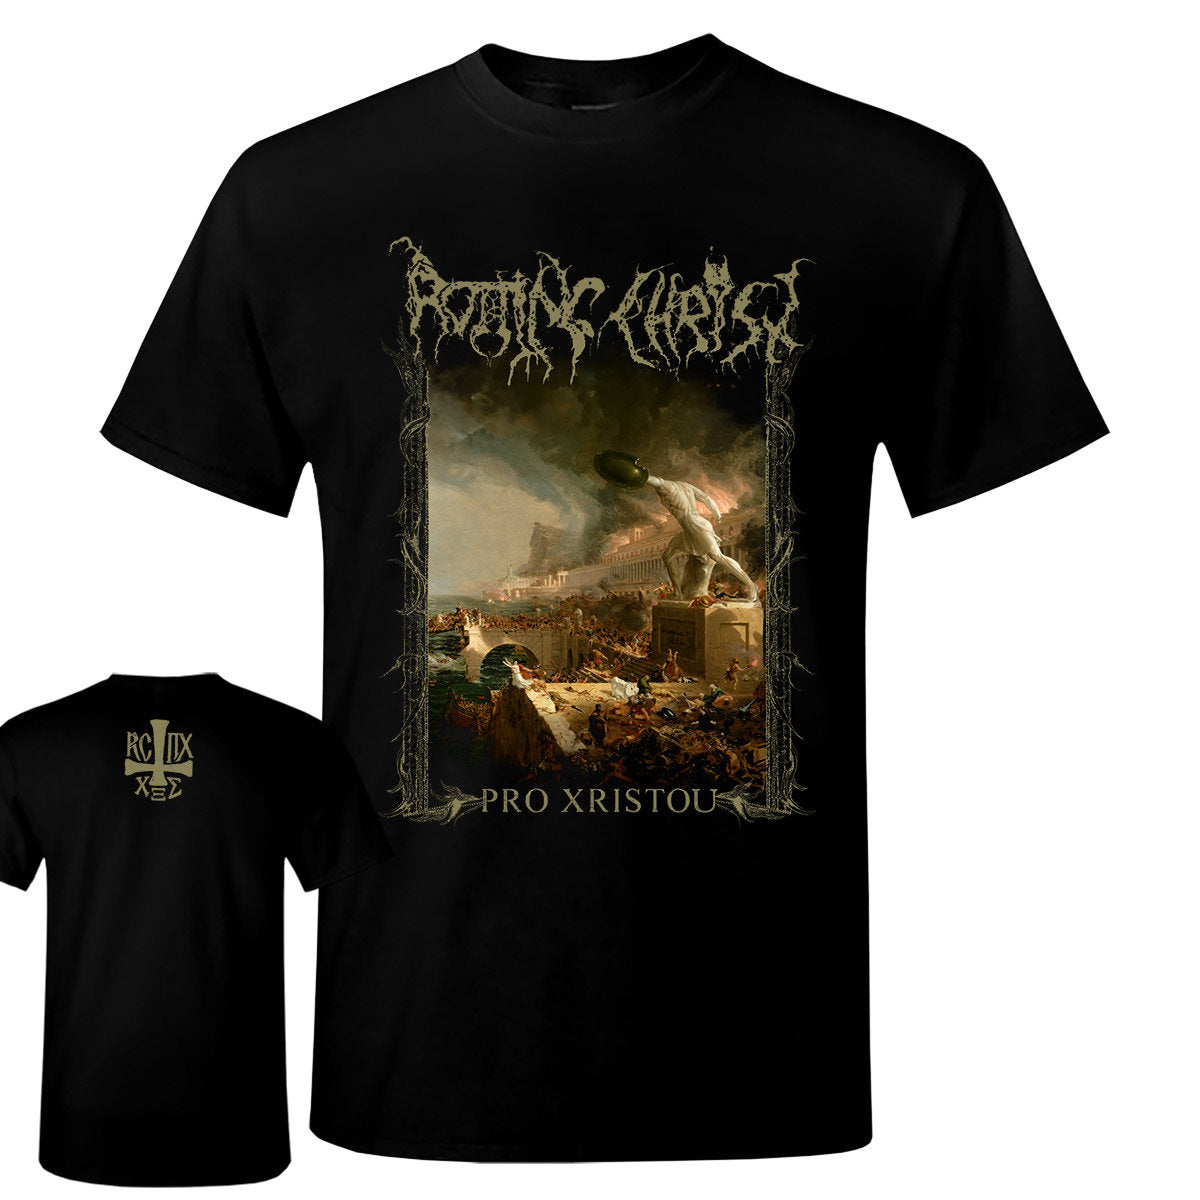 Rotting Christ "Pro Xristou" T shirt